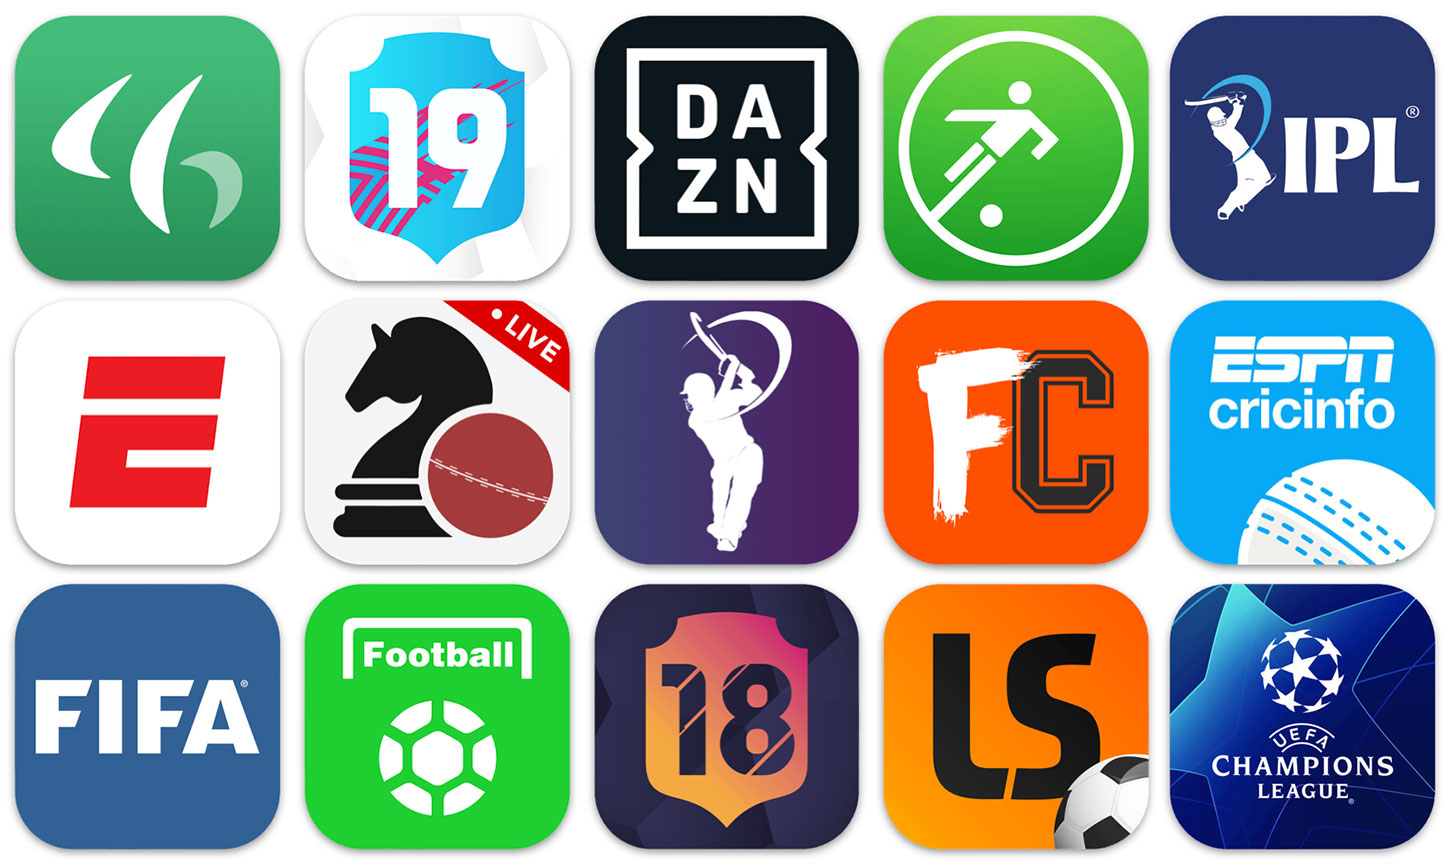 Global Sports Apps Downloads Surpassed 250 Million Last Quarter